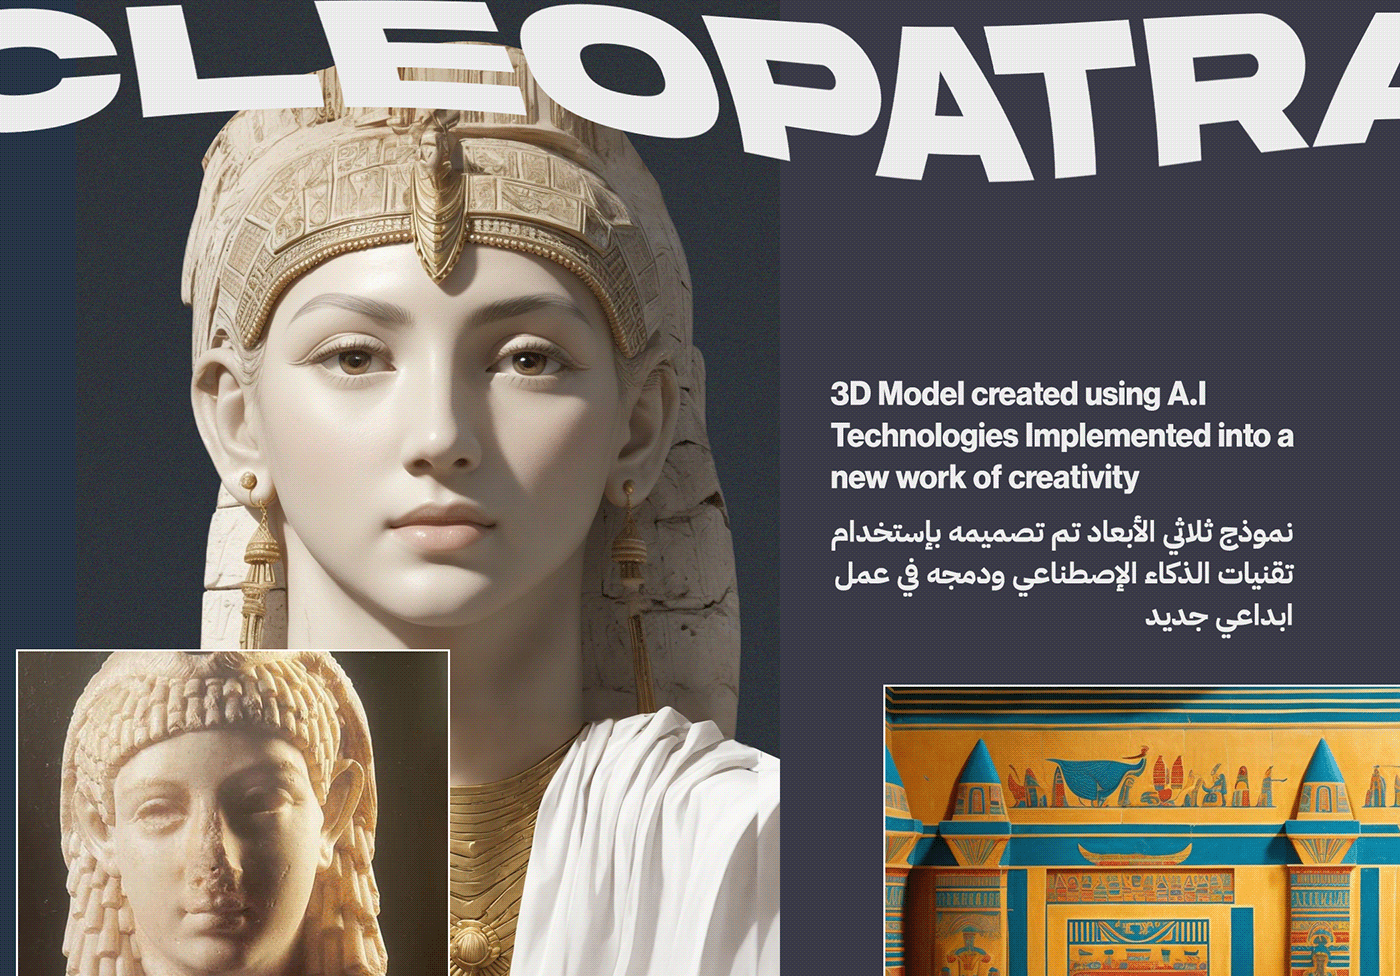 cleopatra egypt book cover cover design Cover Art artwork concept art Character design 